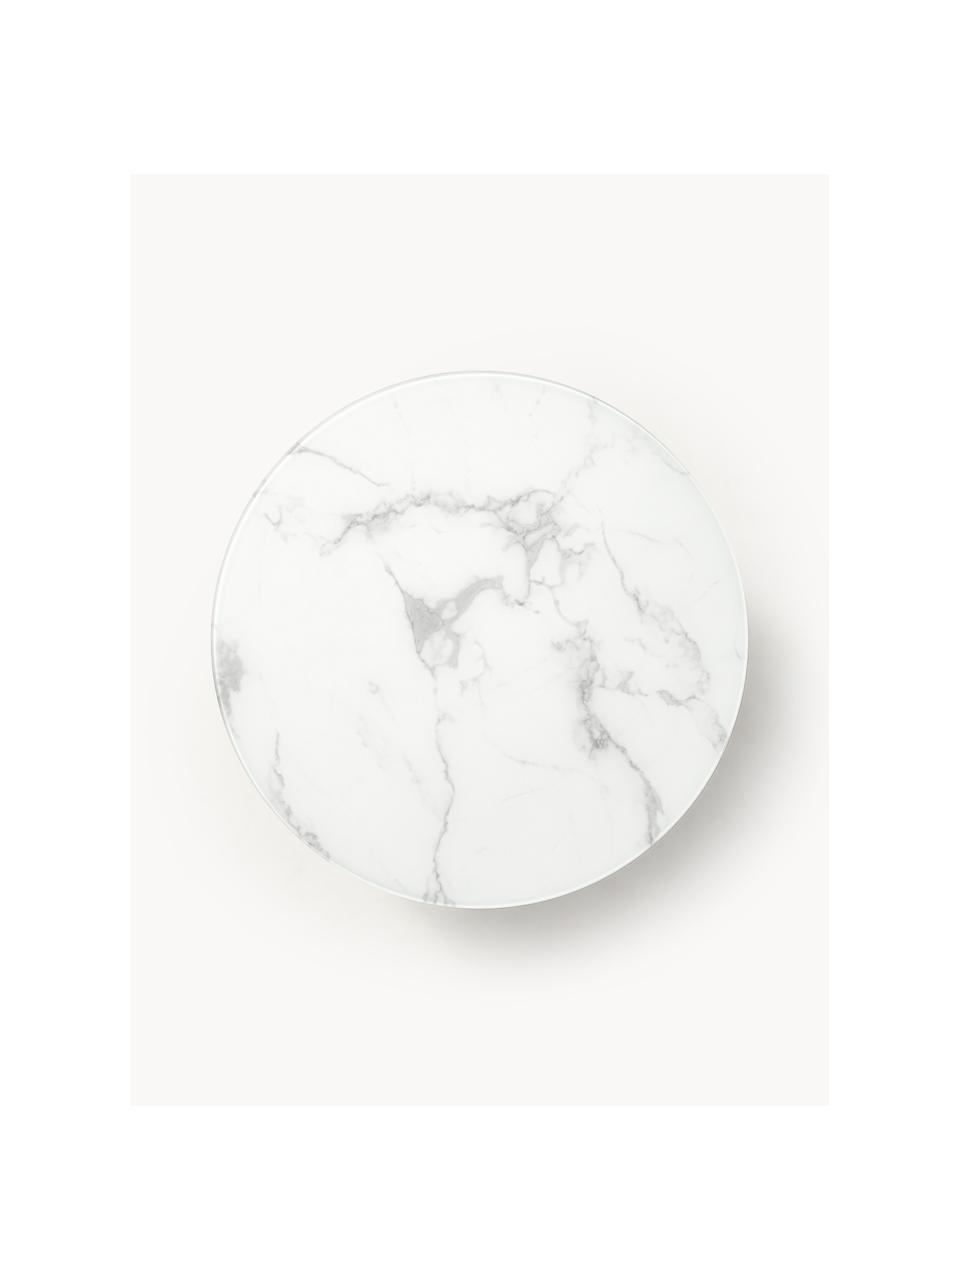 Table basse ronde avec plateau look marbre Antigua, Blanc aspect marbre, or laiton, Ø 80 cm